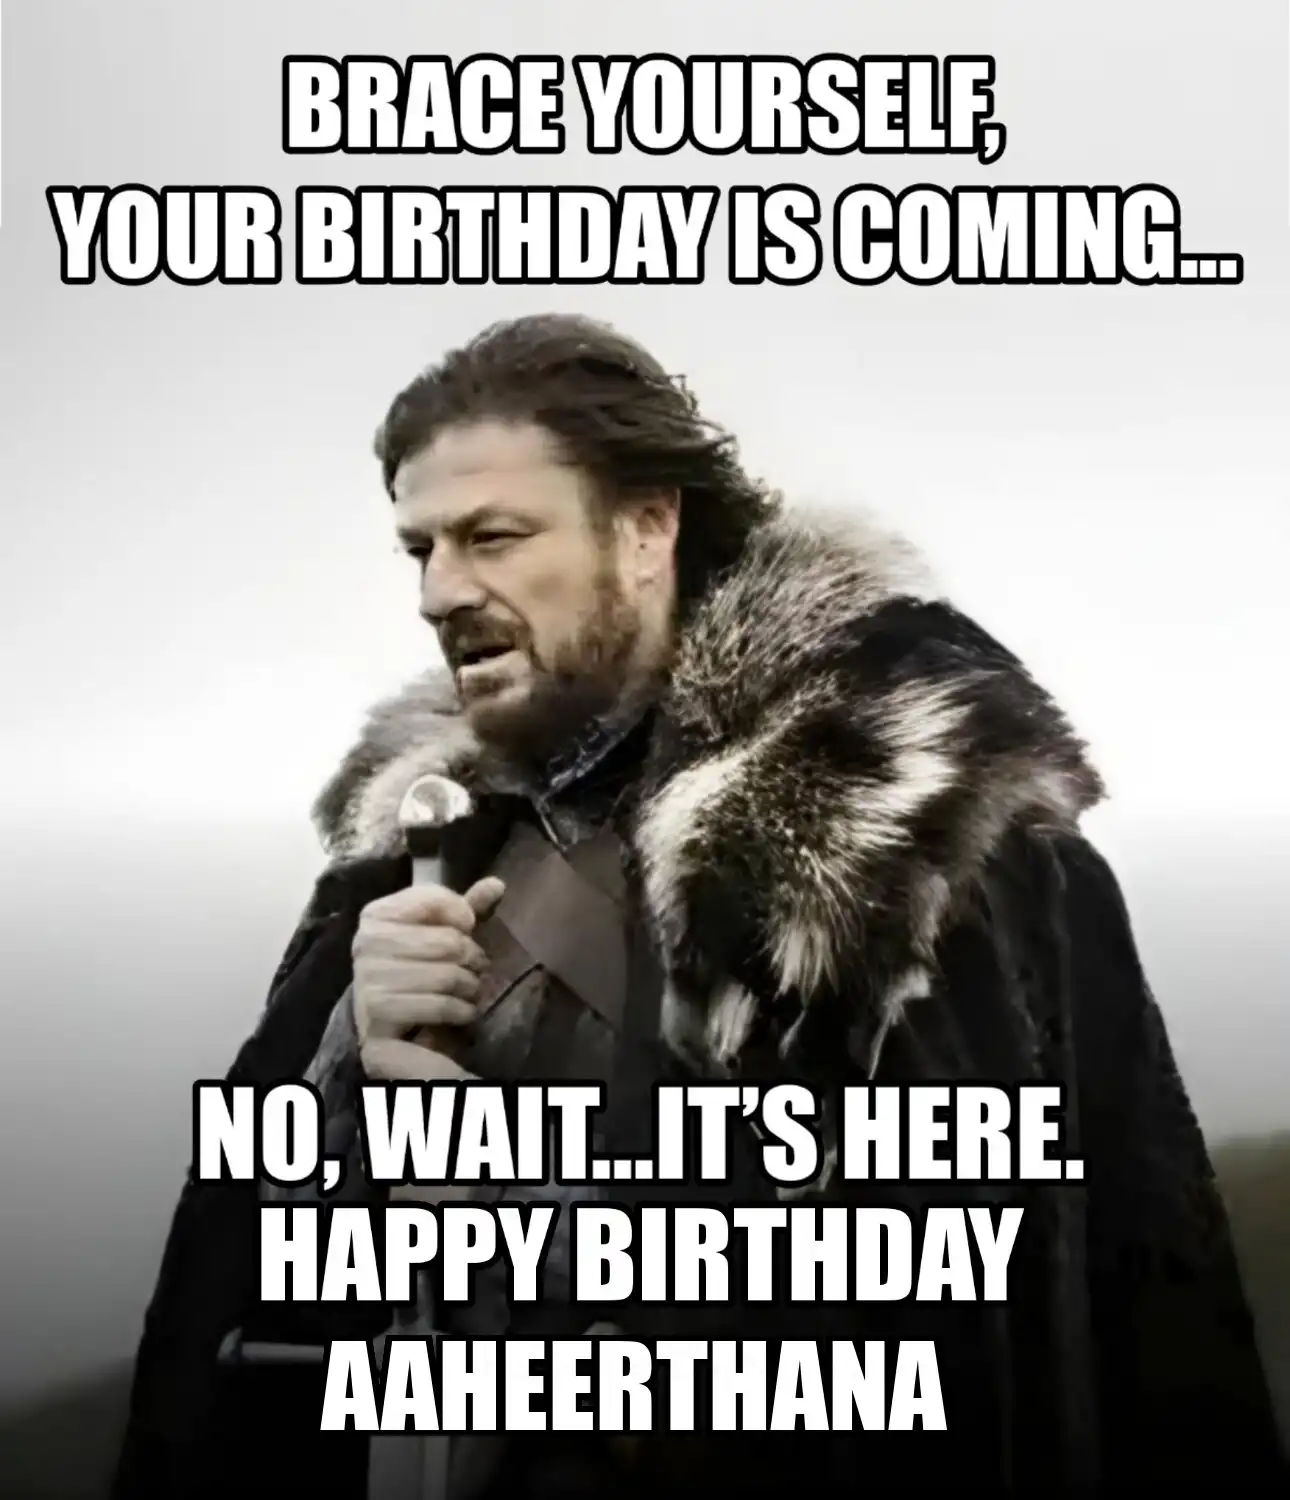 Happy Birthday Aaheerthana Brace Yourself Your Birthday Is Coming Meme